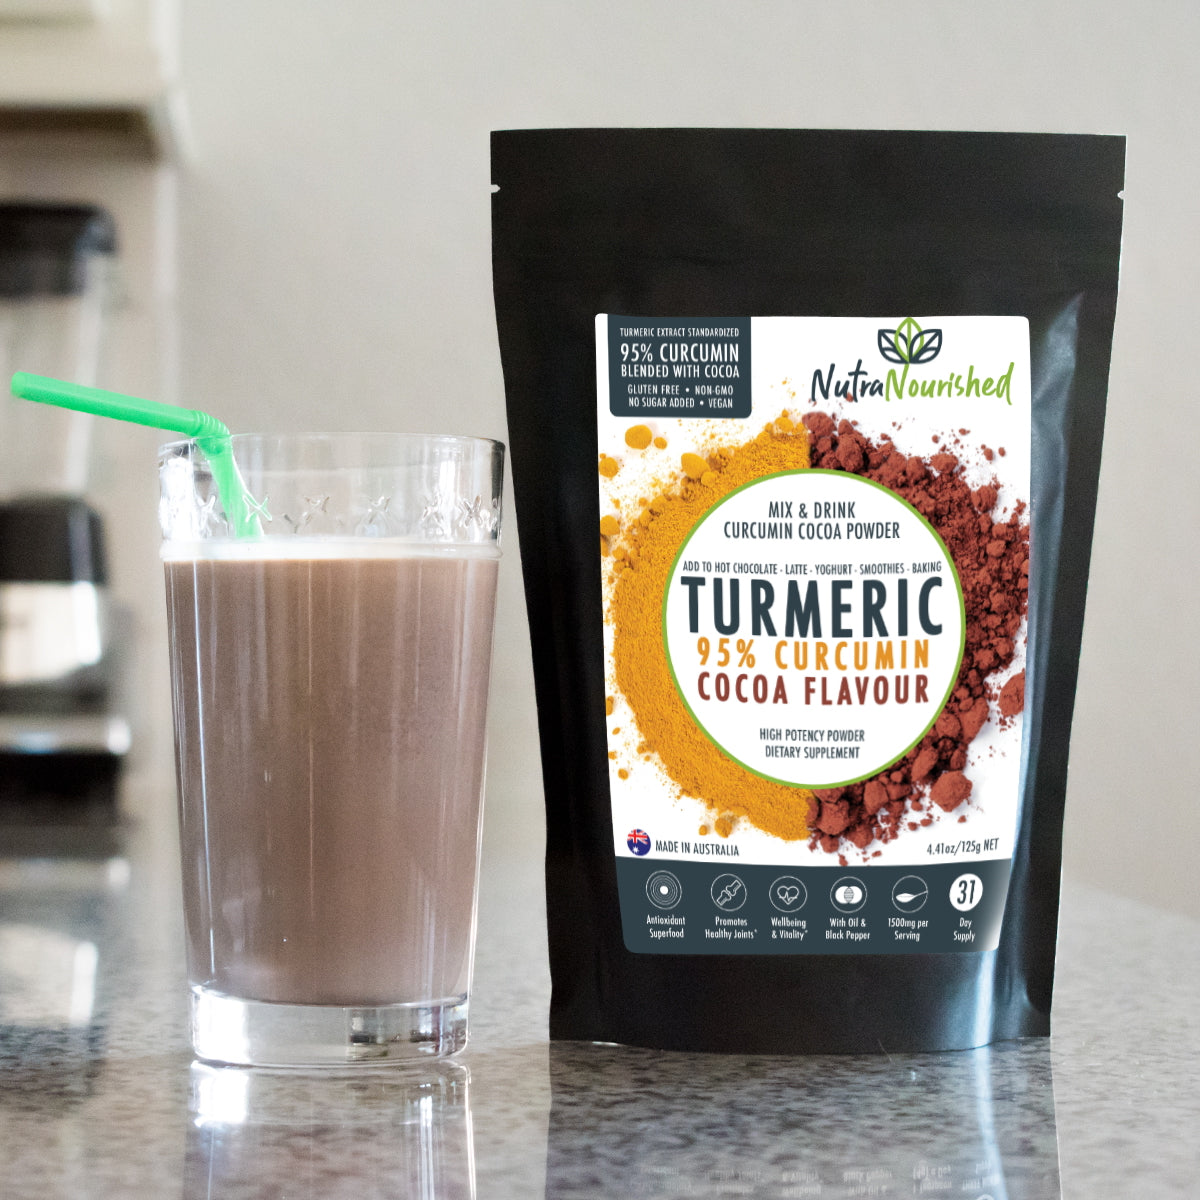 Gray Turmeric 95%  Curcumin Extract w/ Cocoa Flavour - Pure & Organic - 1500mg Turmeric Powder With Black Pepper